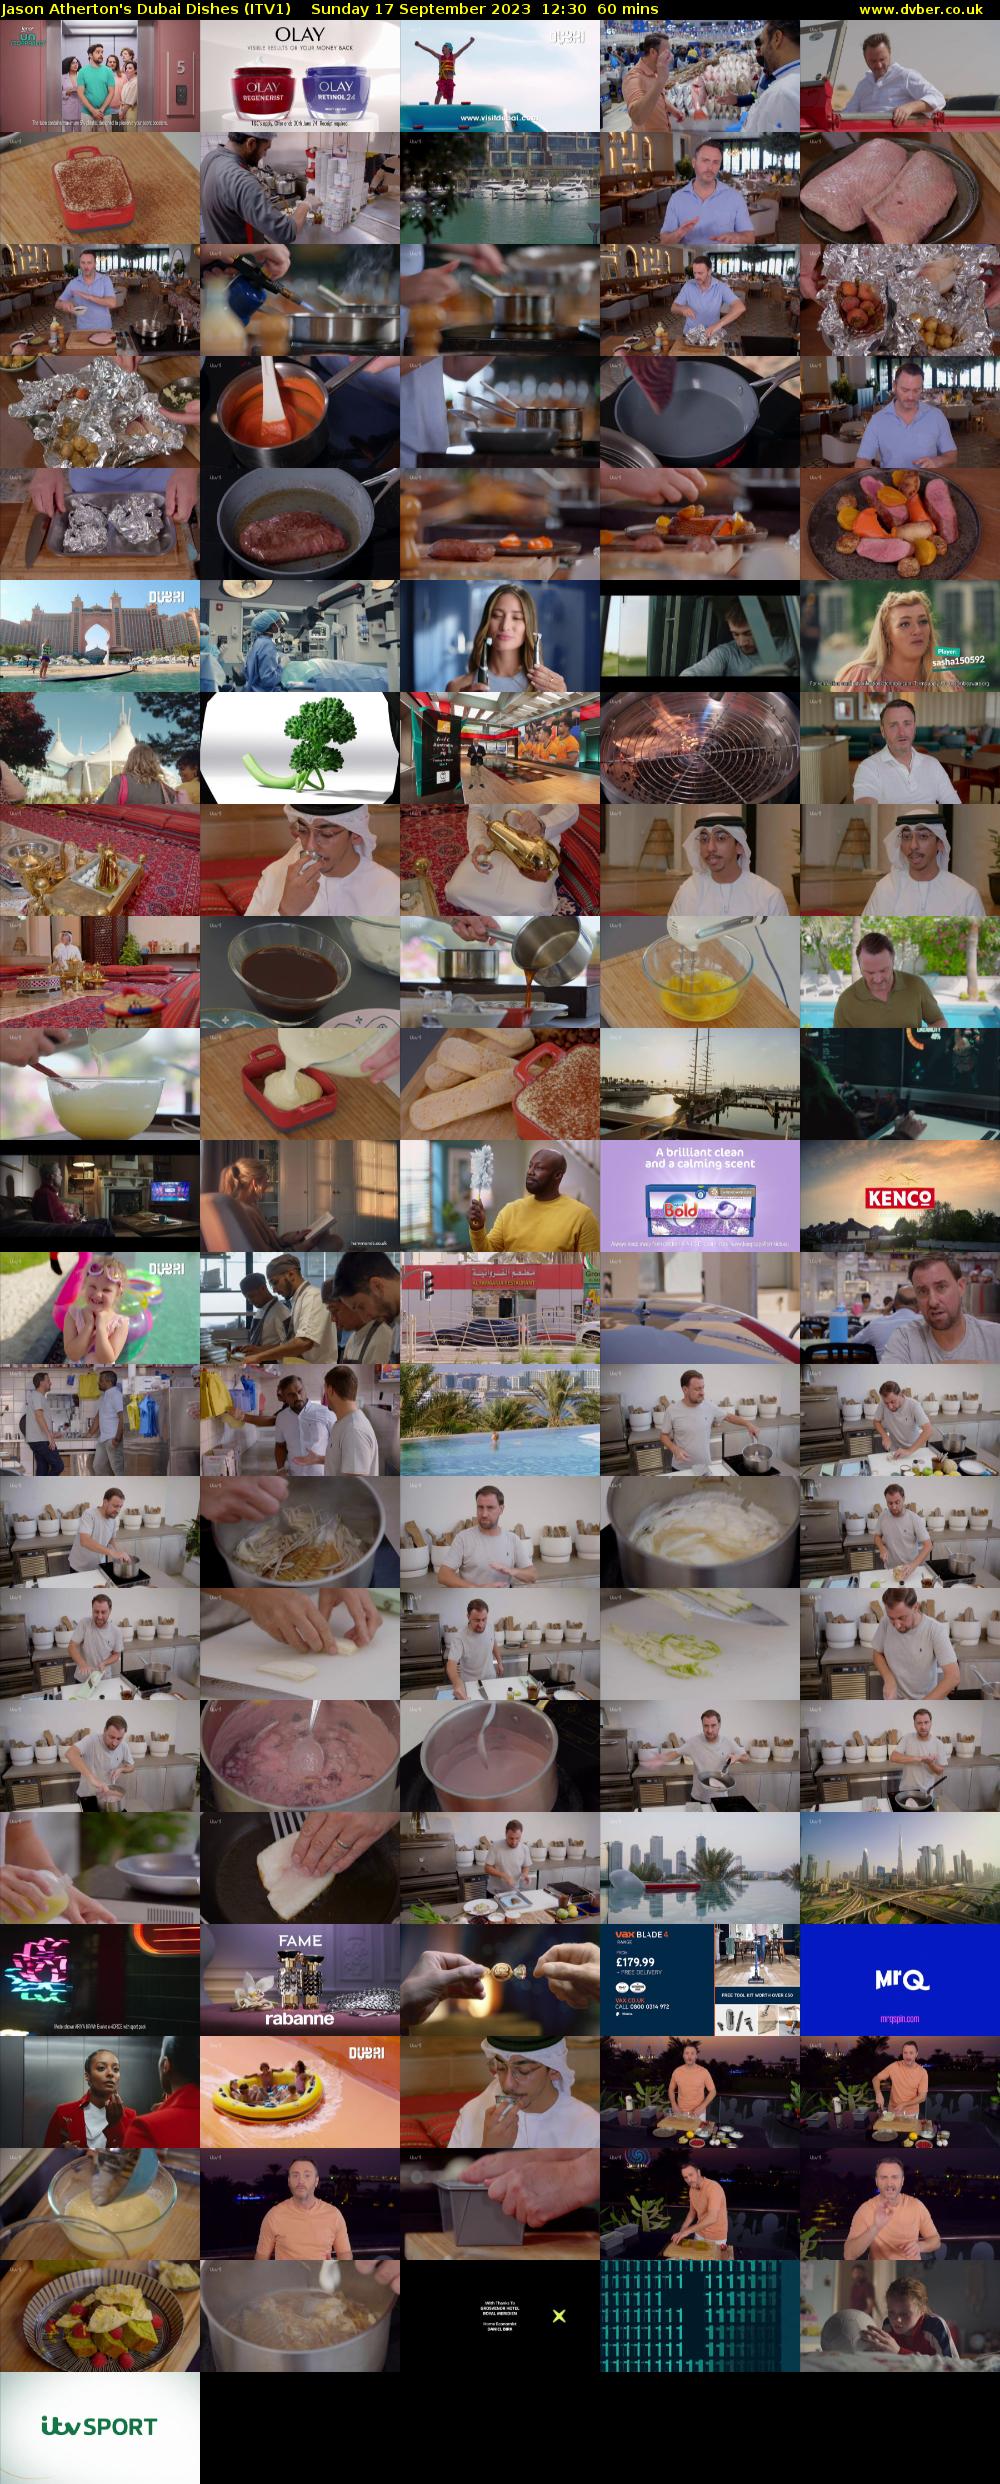 Jason Atherton's Dubai Dishes (ITV1) Sunday 17 September 2023 12:30 - 13:30